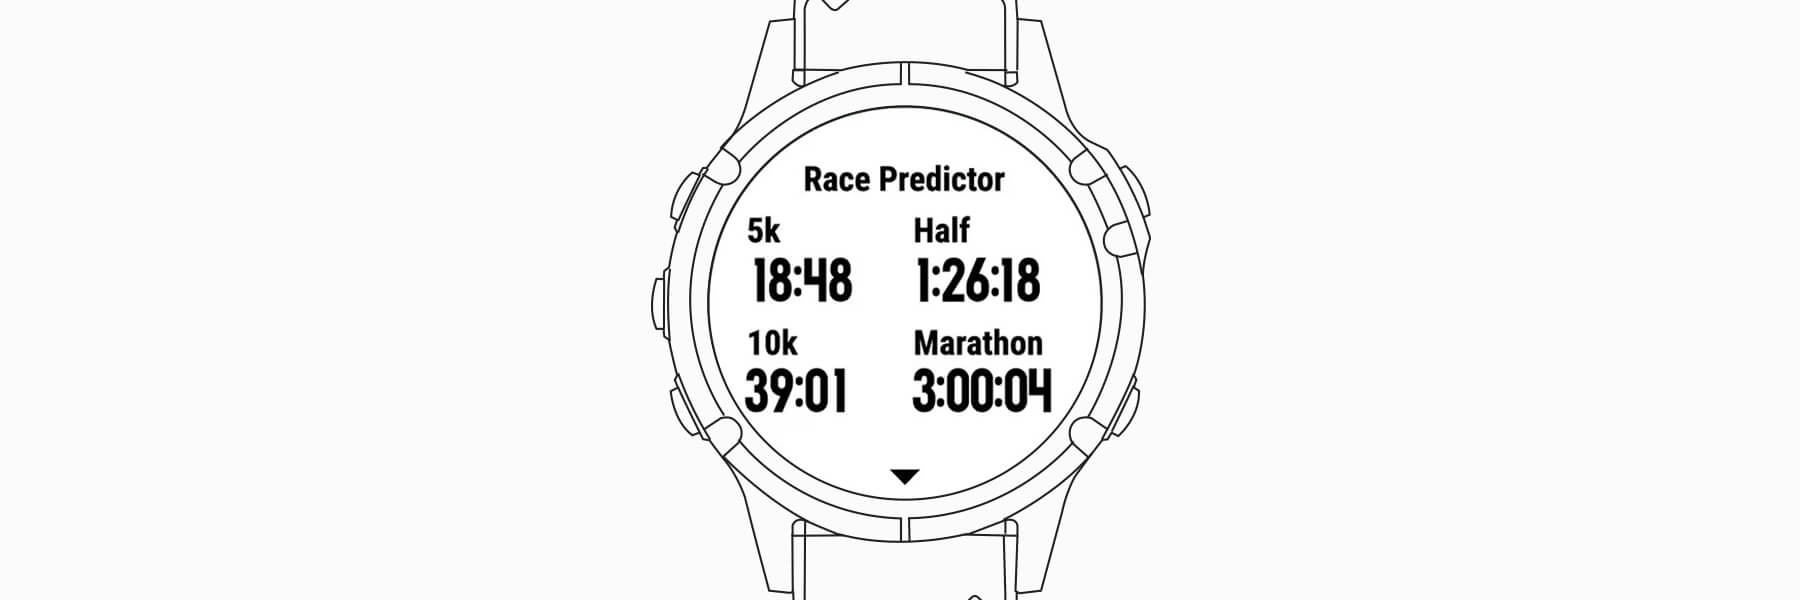 Race Time Prediction